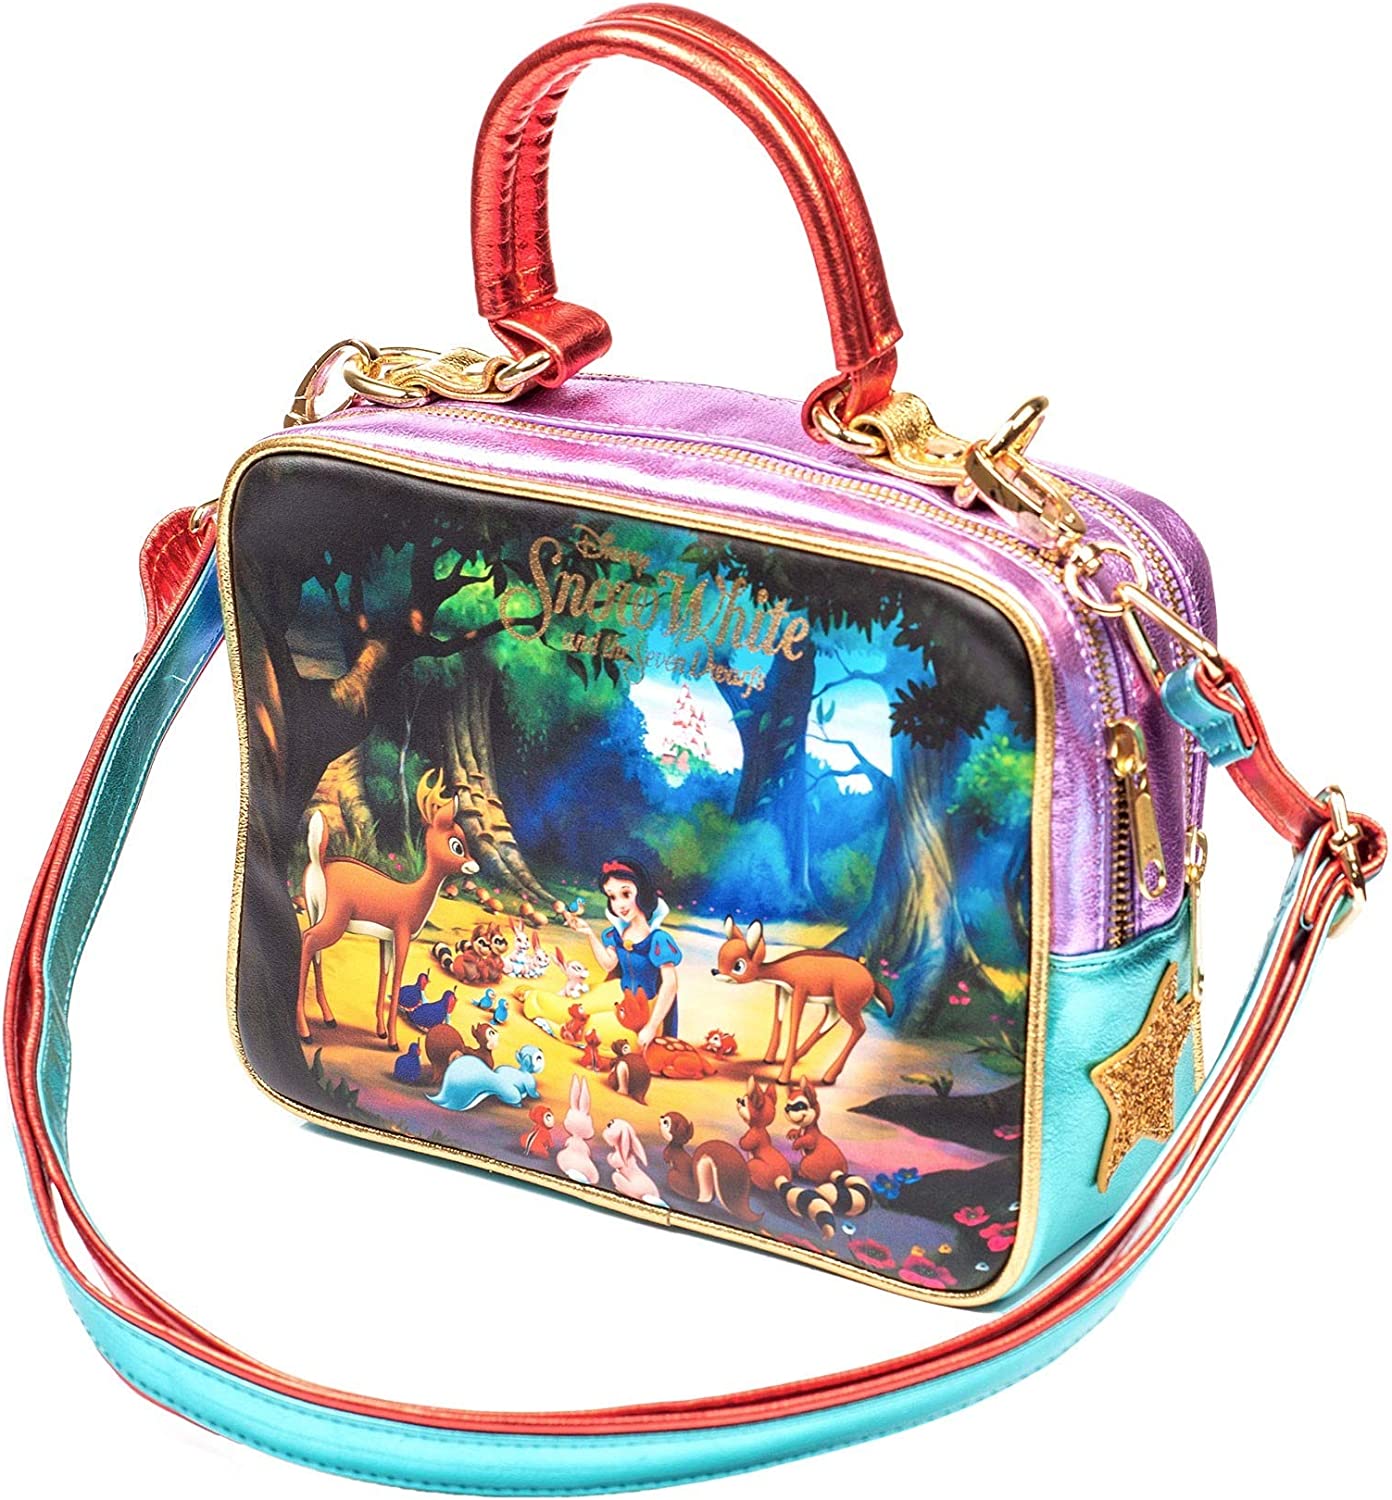 Irregular Choice Disney Snow White 'Fairest in the Land' Bag Standard